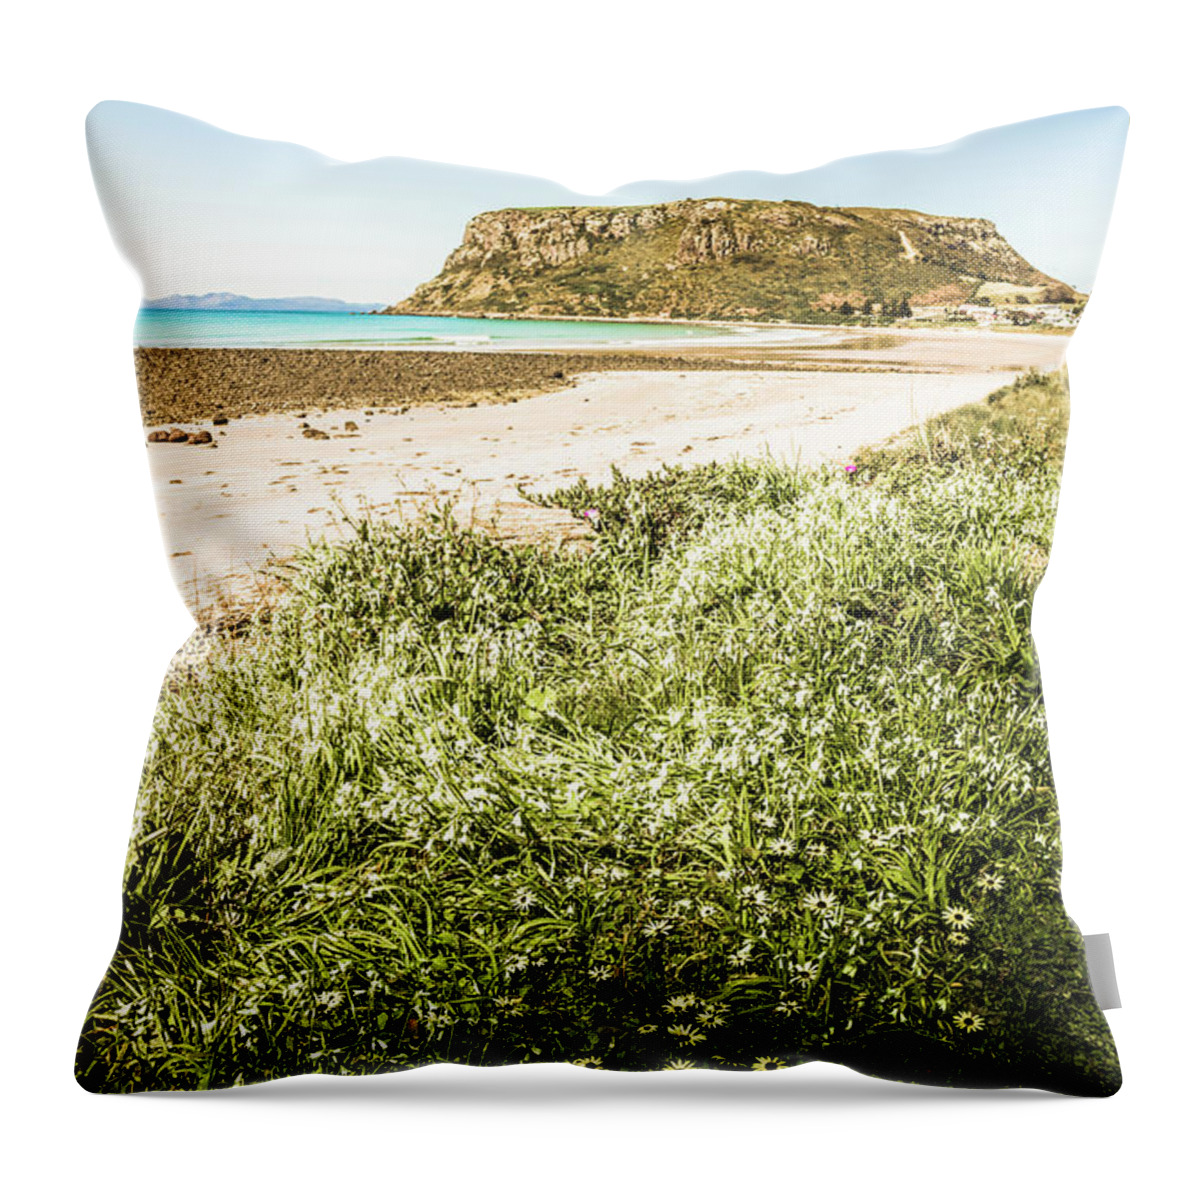 Scenic Throw Pillow featuring the photograph Scenic stony seashore by Jorgo Photography